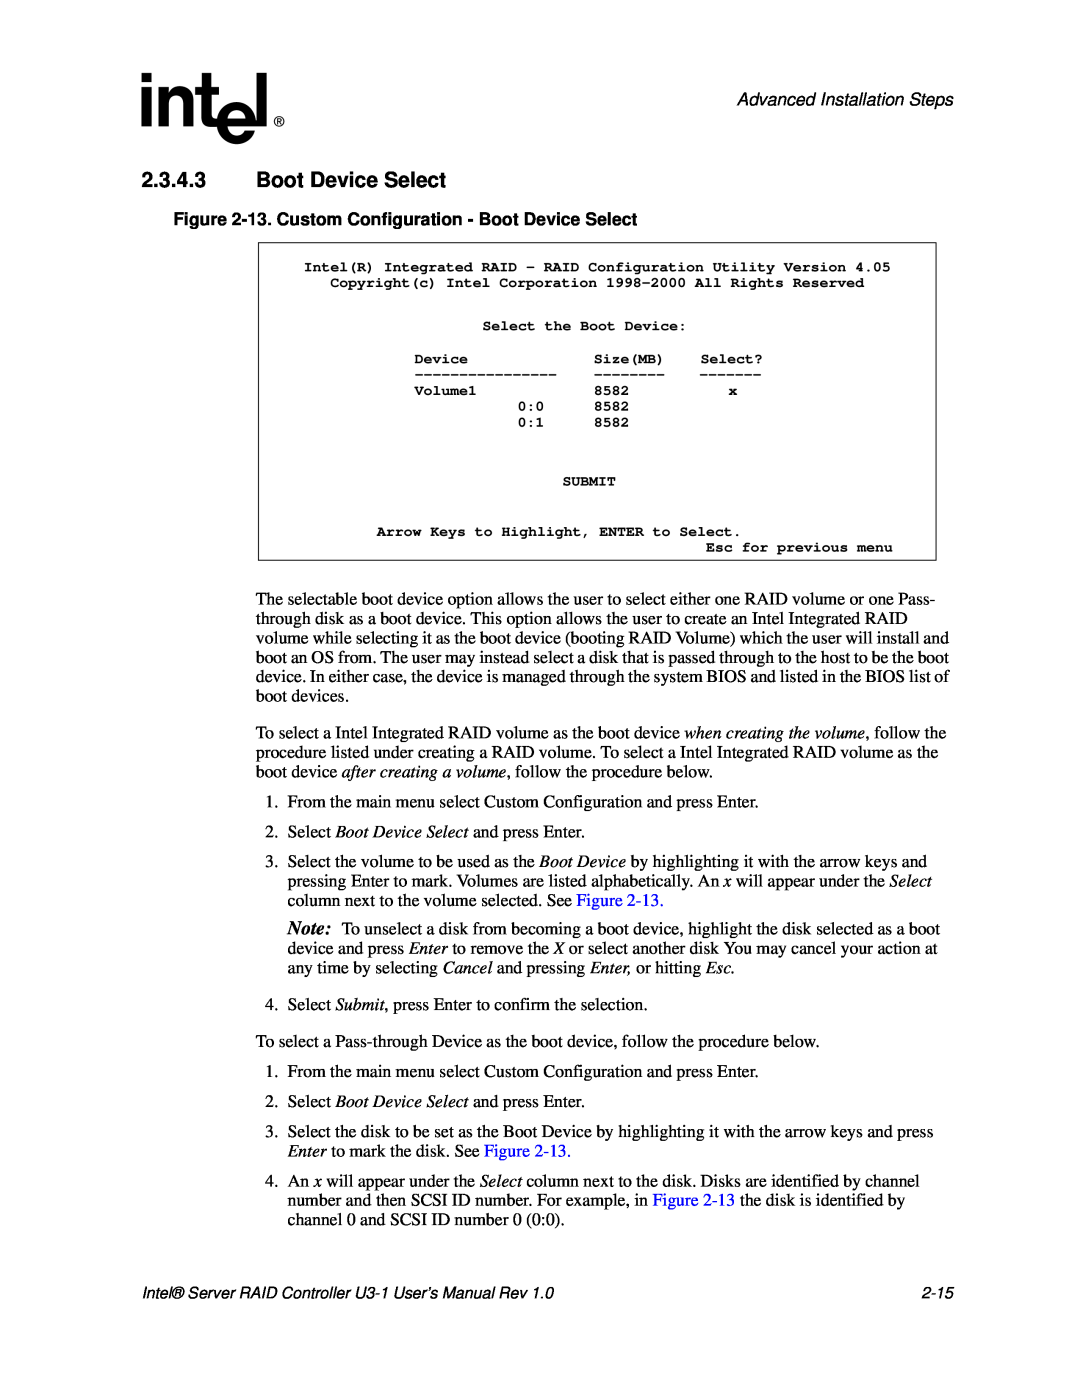 Intel SRCU31 user manual 2.3.4.3Boot Device Select, Advanced Installation Steps 